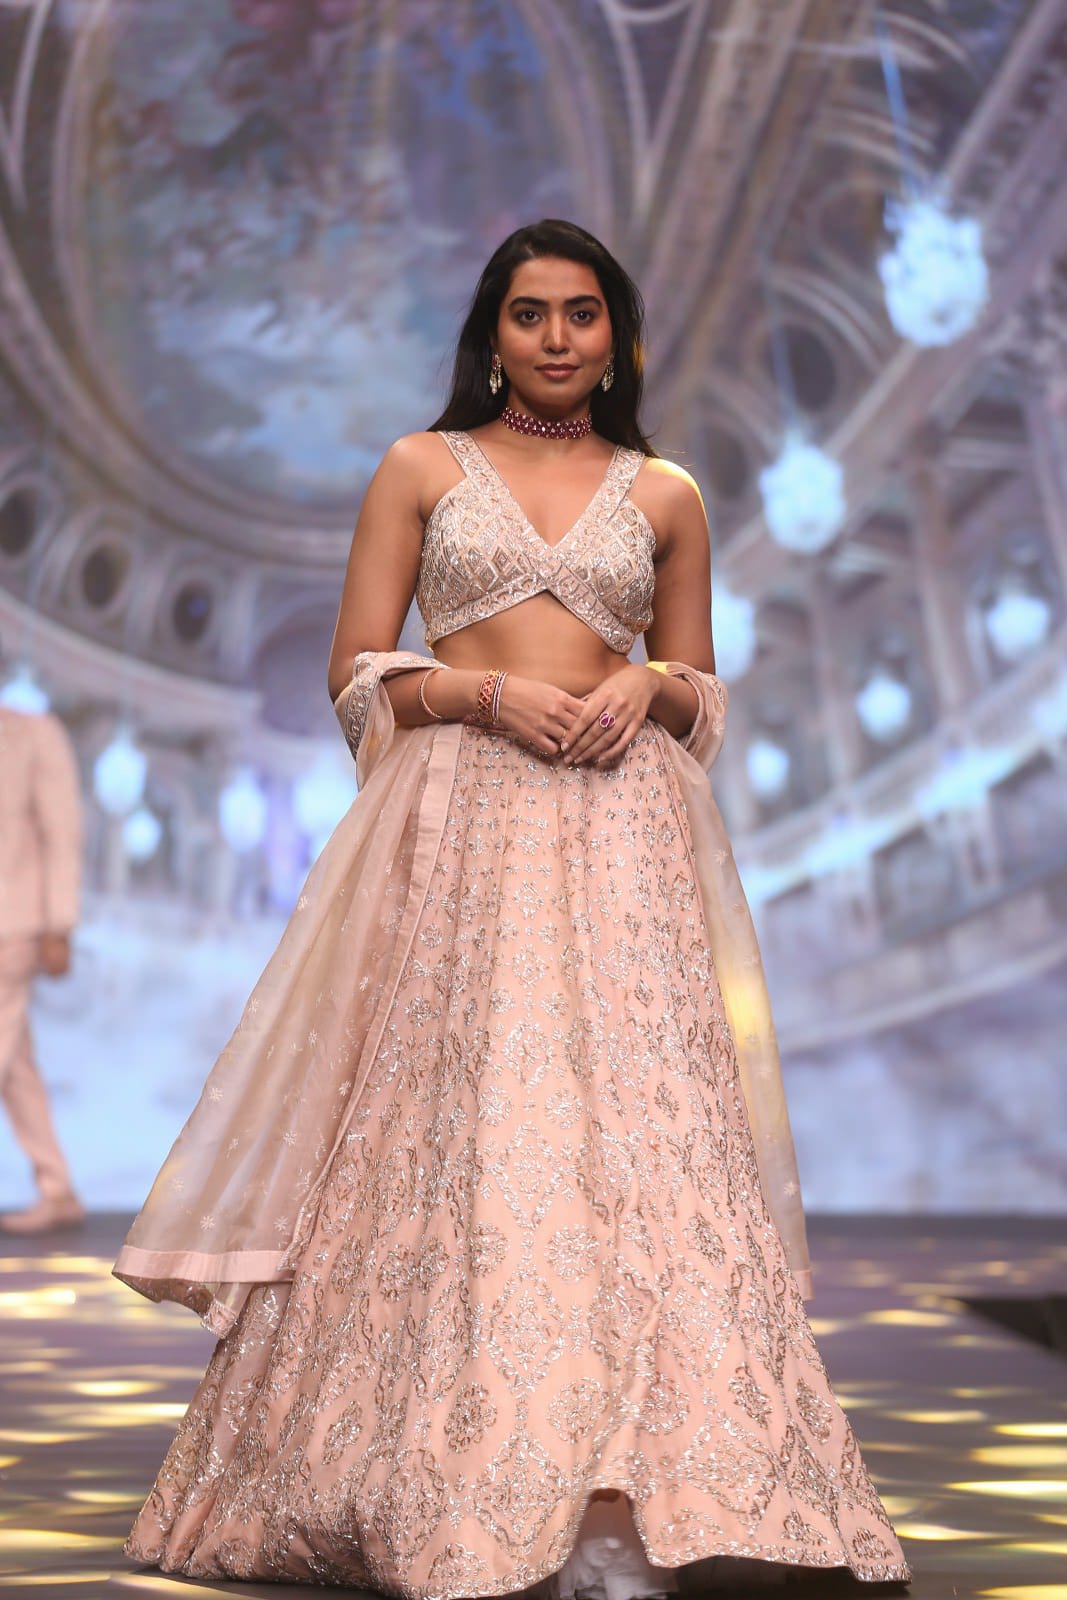 Pic Talk: Shivathmika Looks Stunningly Gorgeous